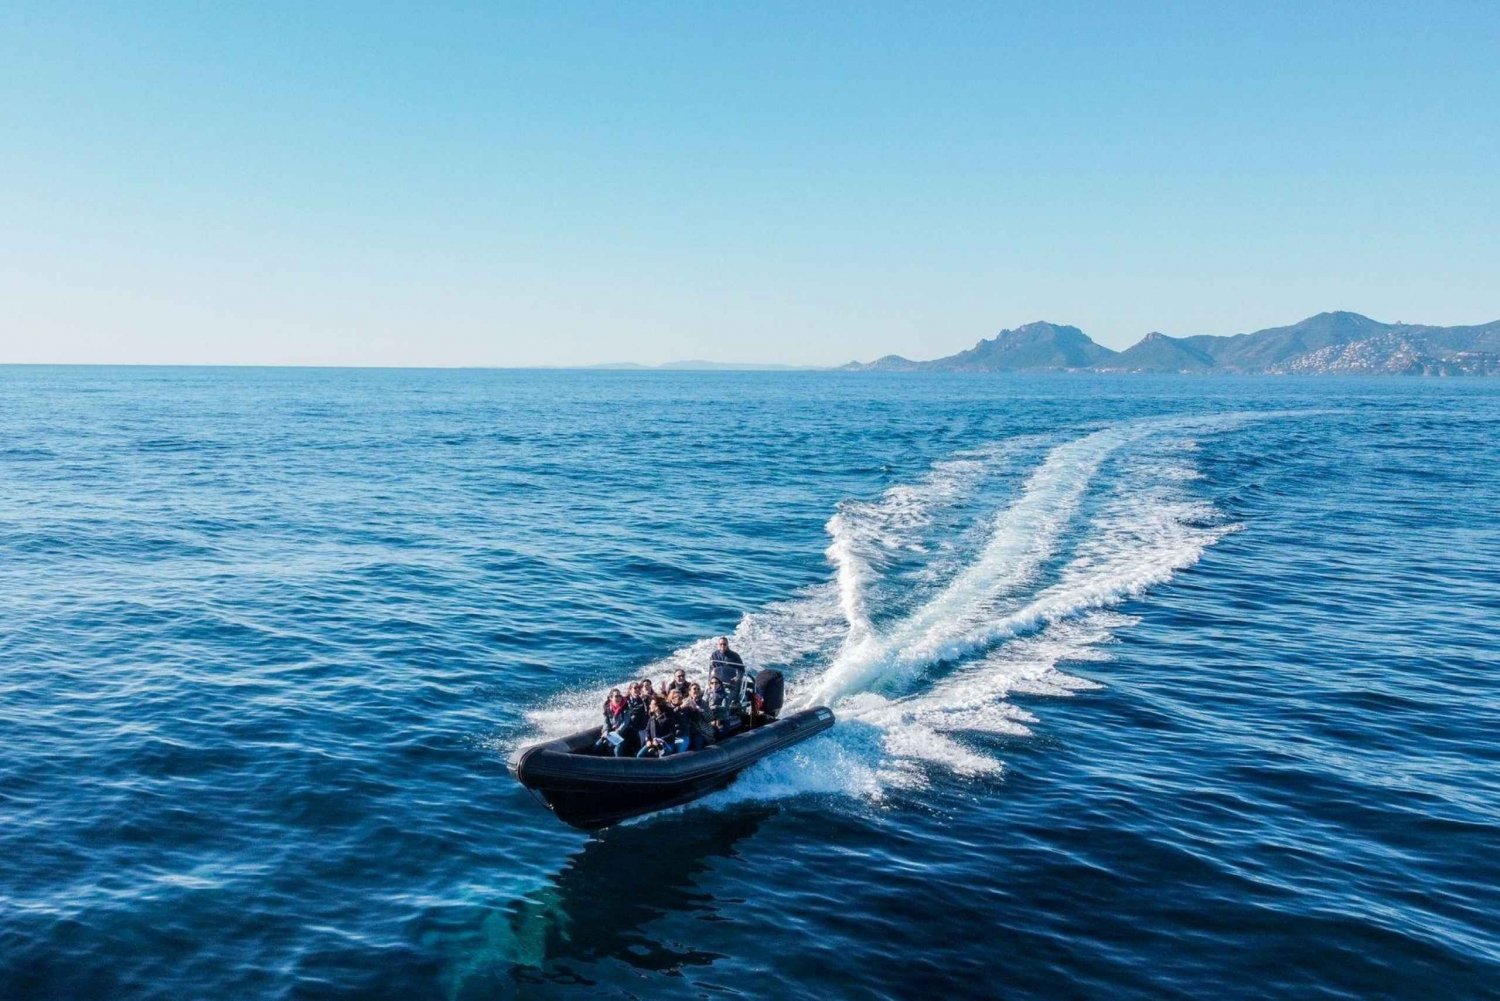 Cannes: Tour en barco semirrígido por las calas panorámicas